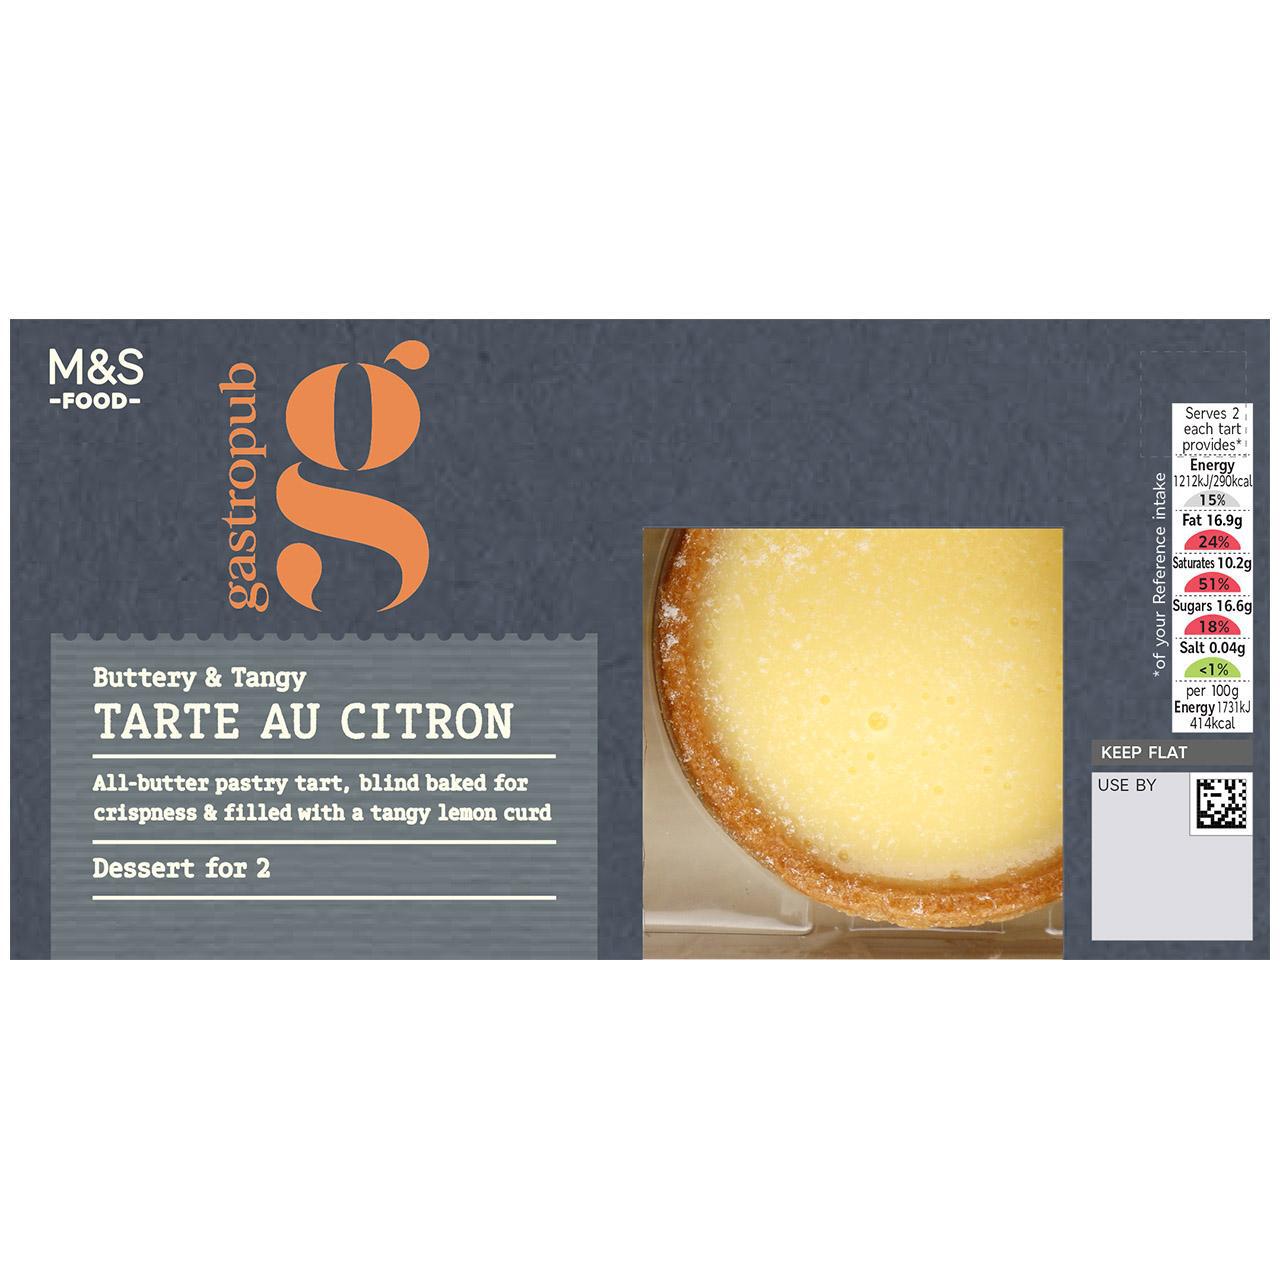 M&S Gastropub 2 Tartes Au Citron 2 per pack